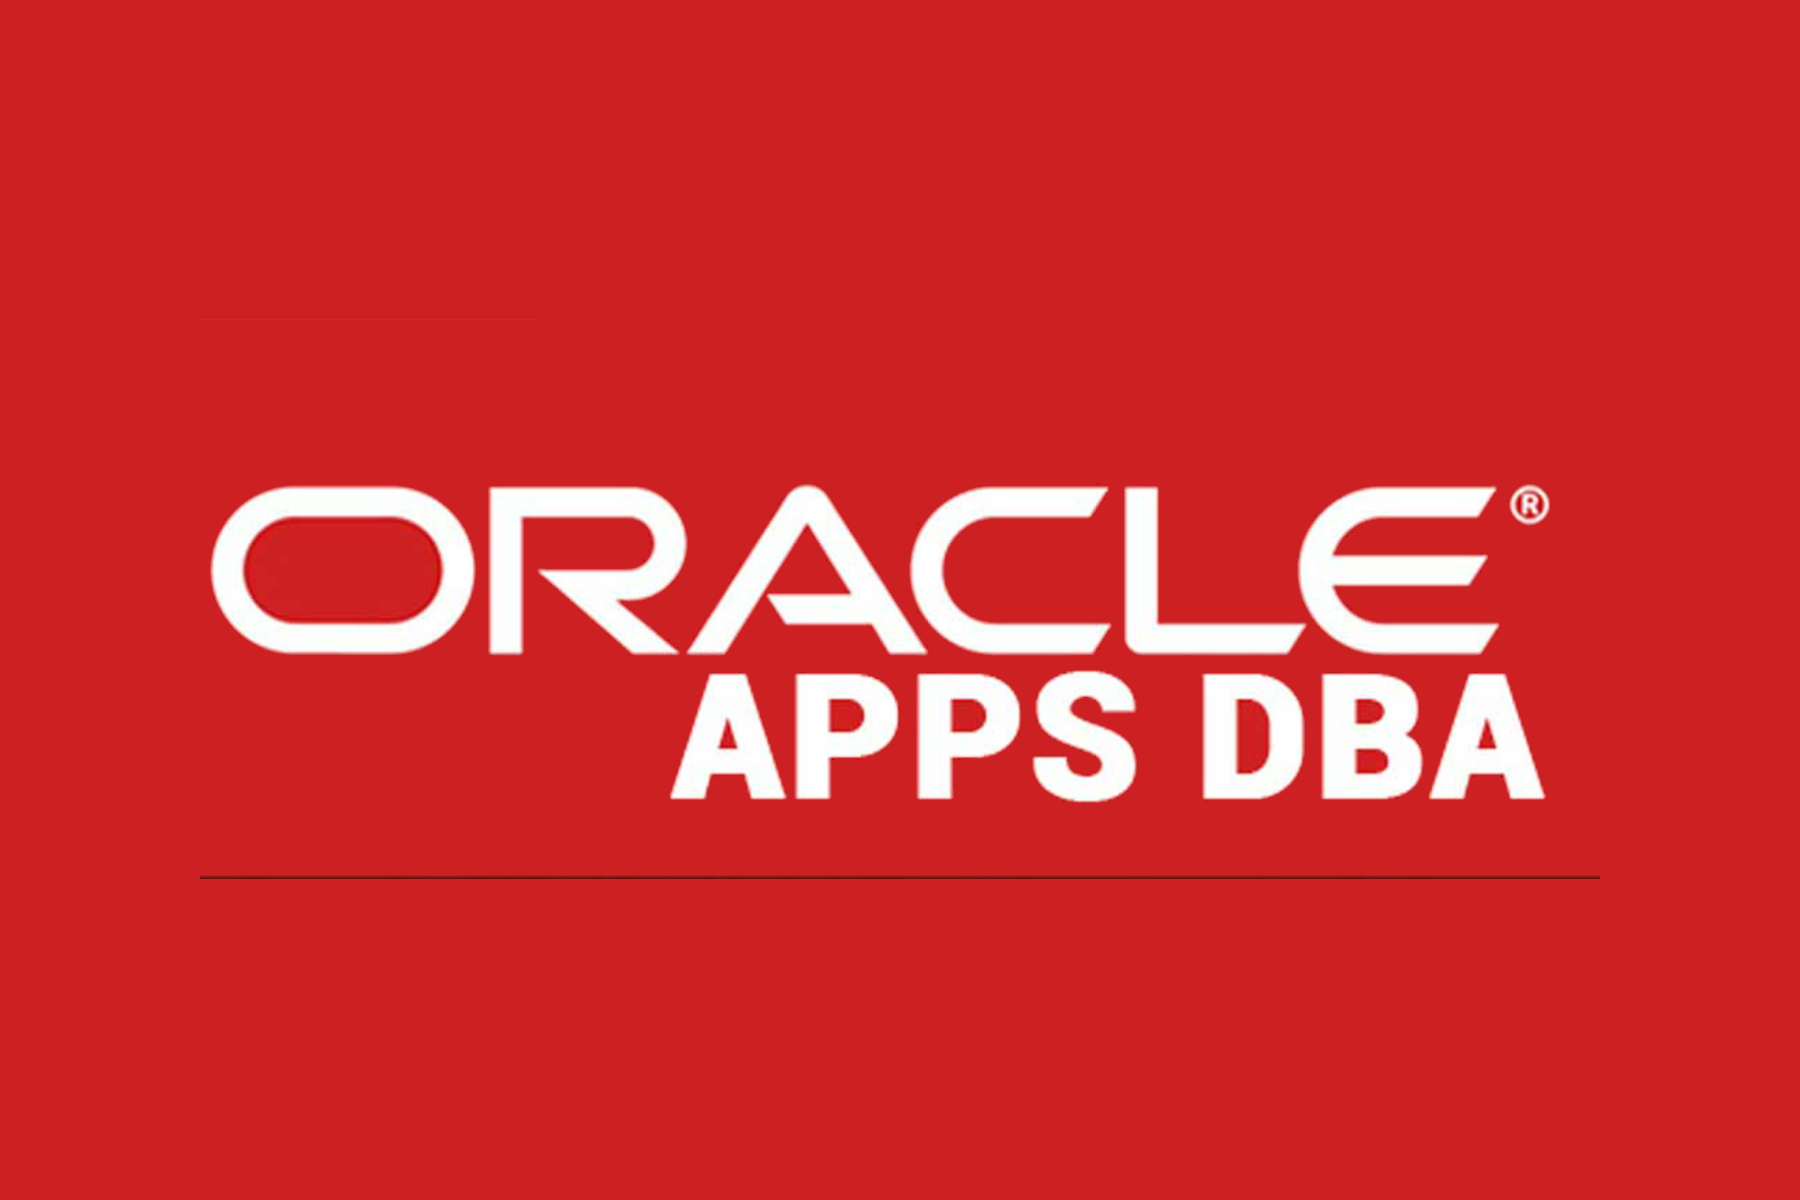 Oracle Apps DBA Training in Chennai